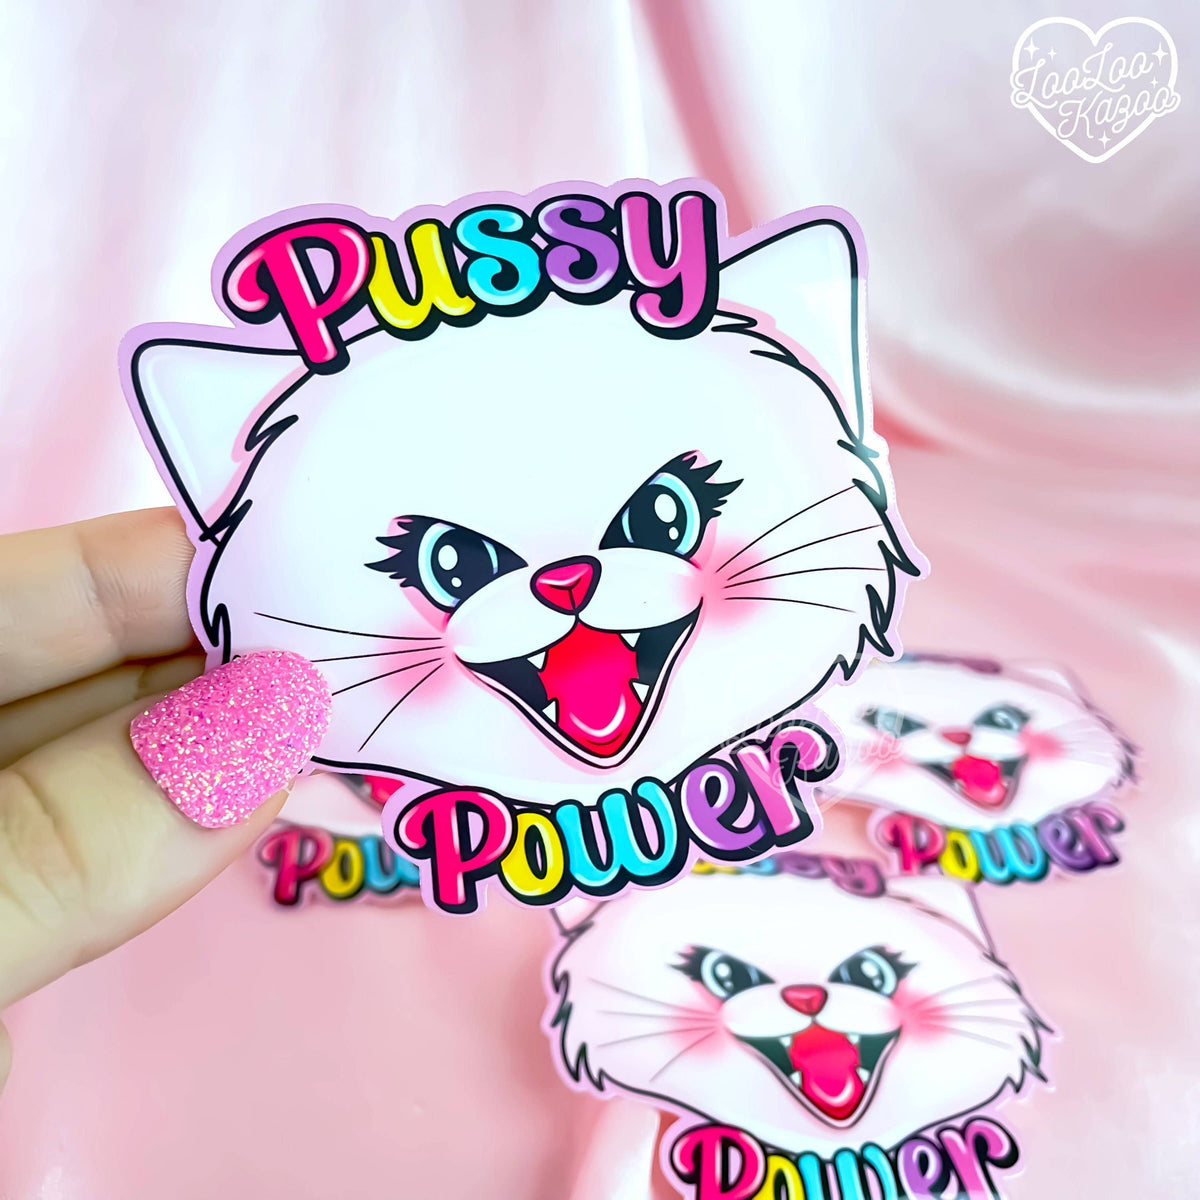 Pussy Power Vinyl Sticker